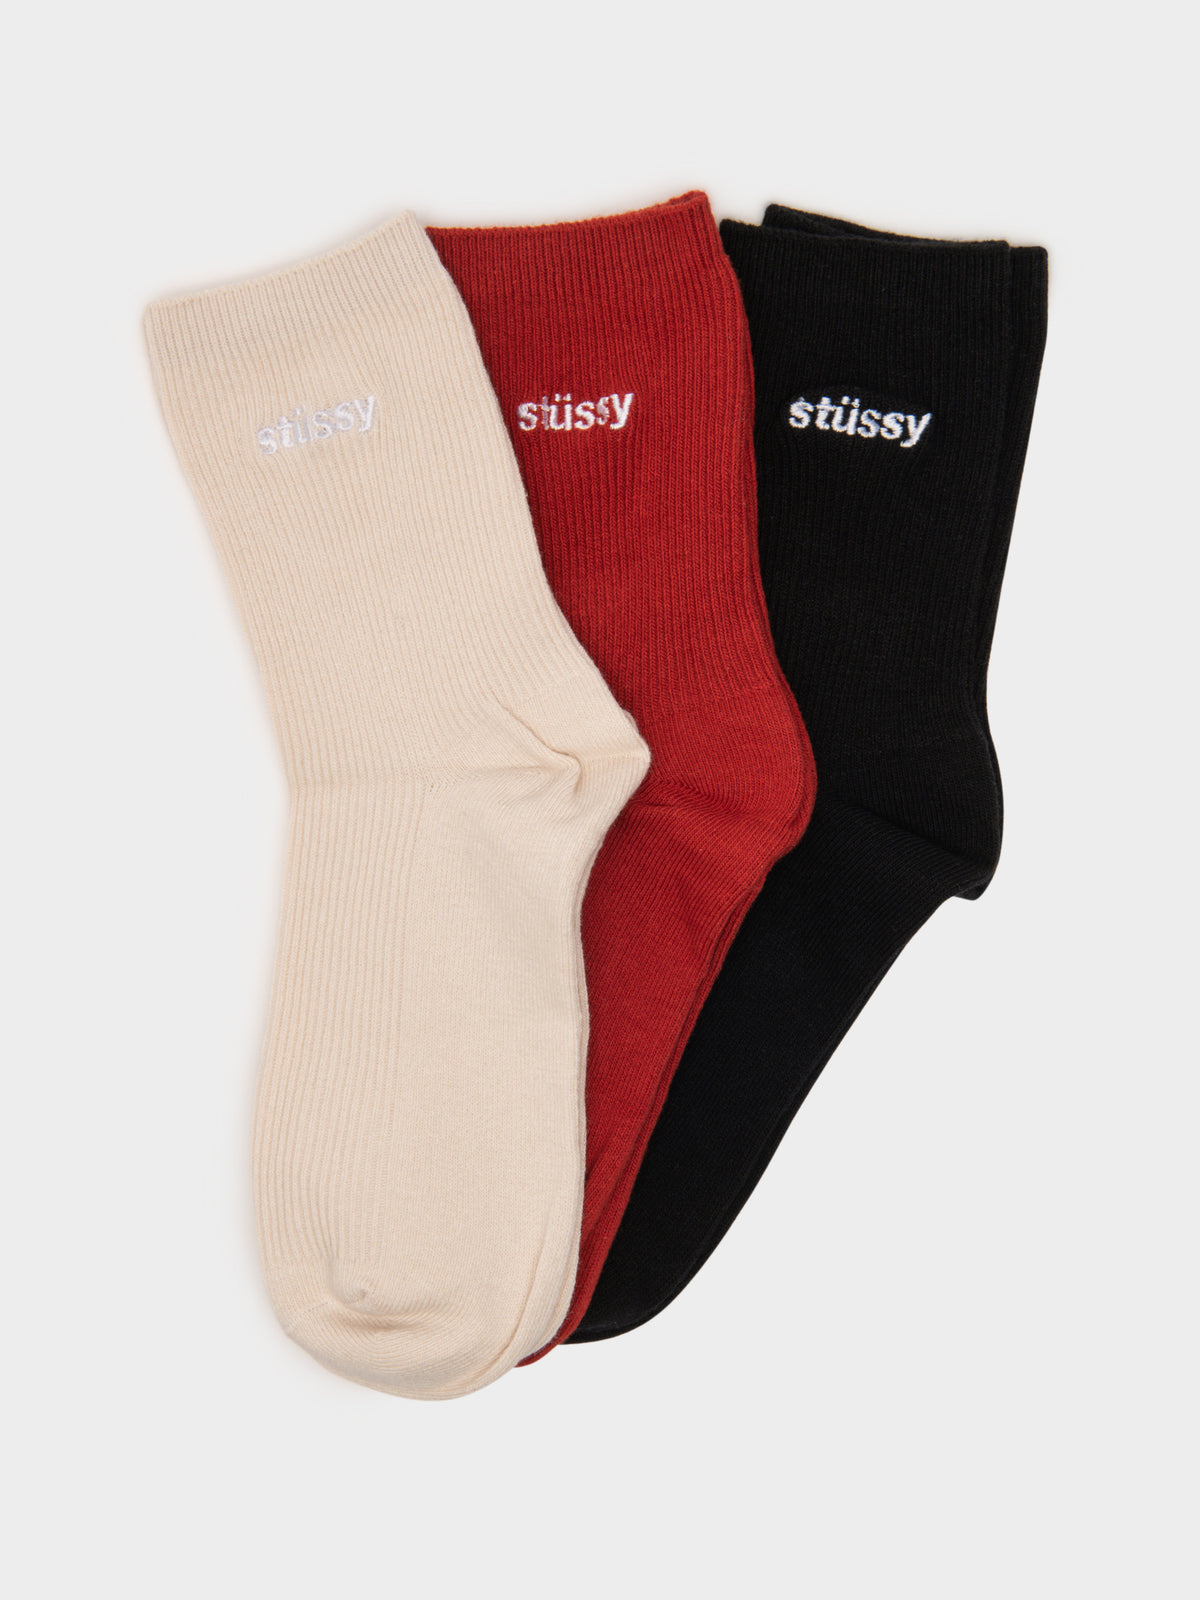 3 Pairs of Ribbed Socks in Red, Black &amp; Beige